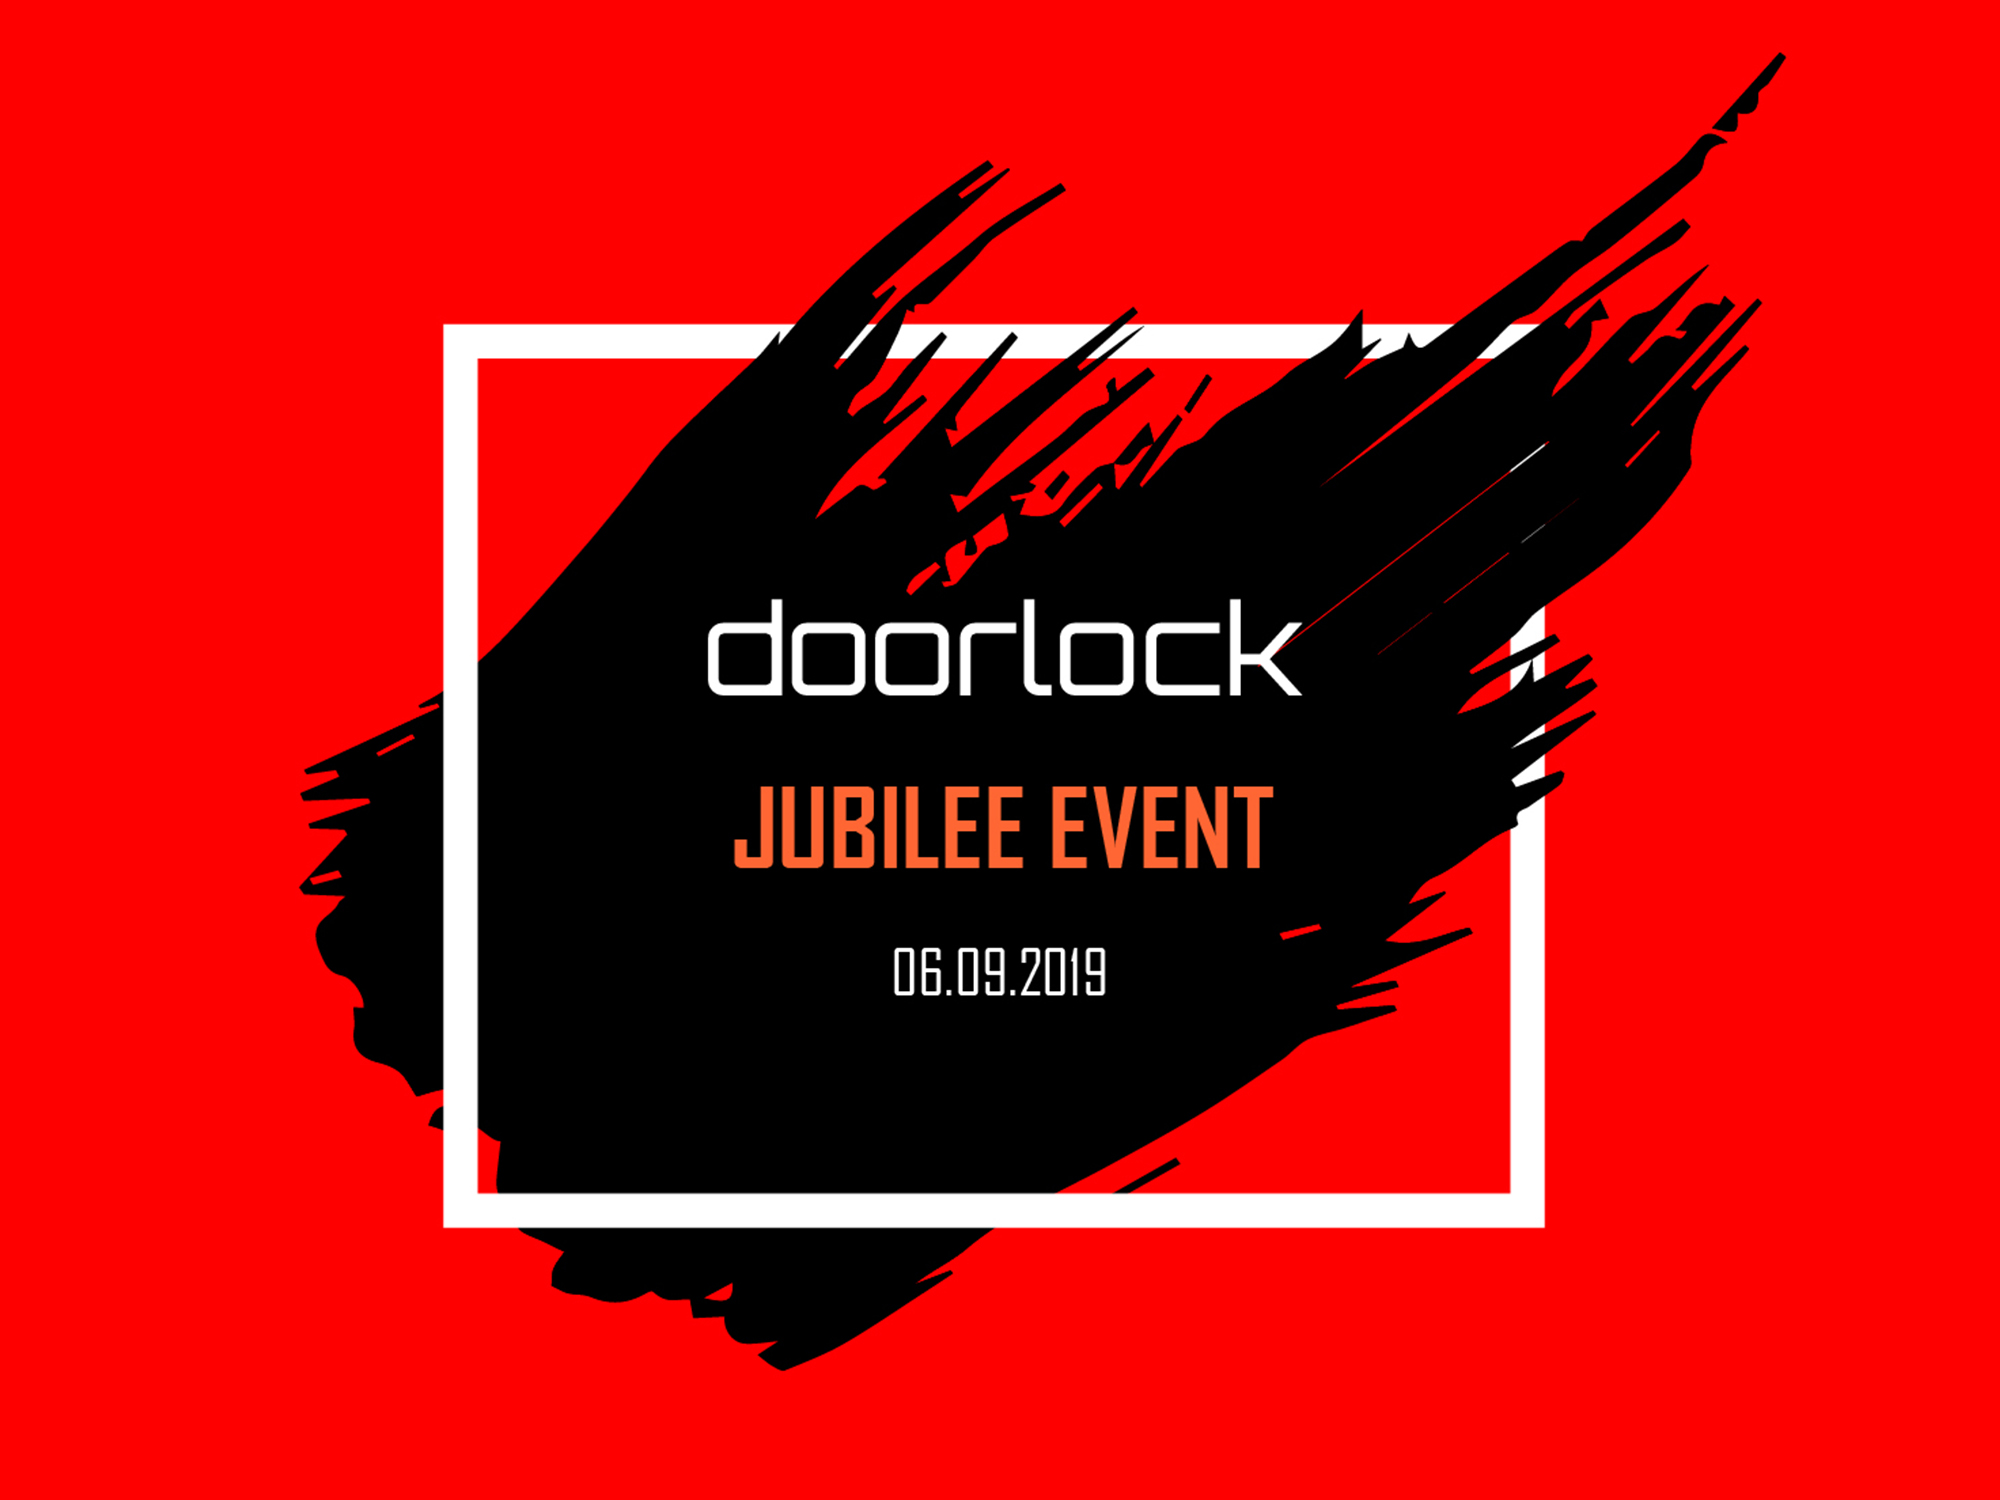 Jubilee Event. Юбилейный корпоратив Doorlock 06.09.2019